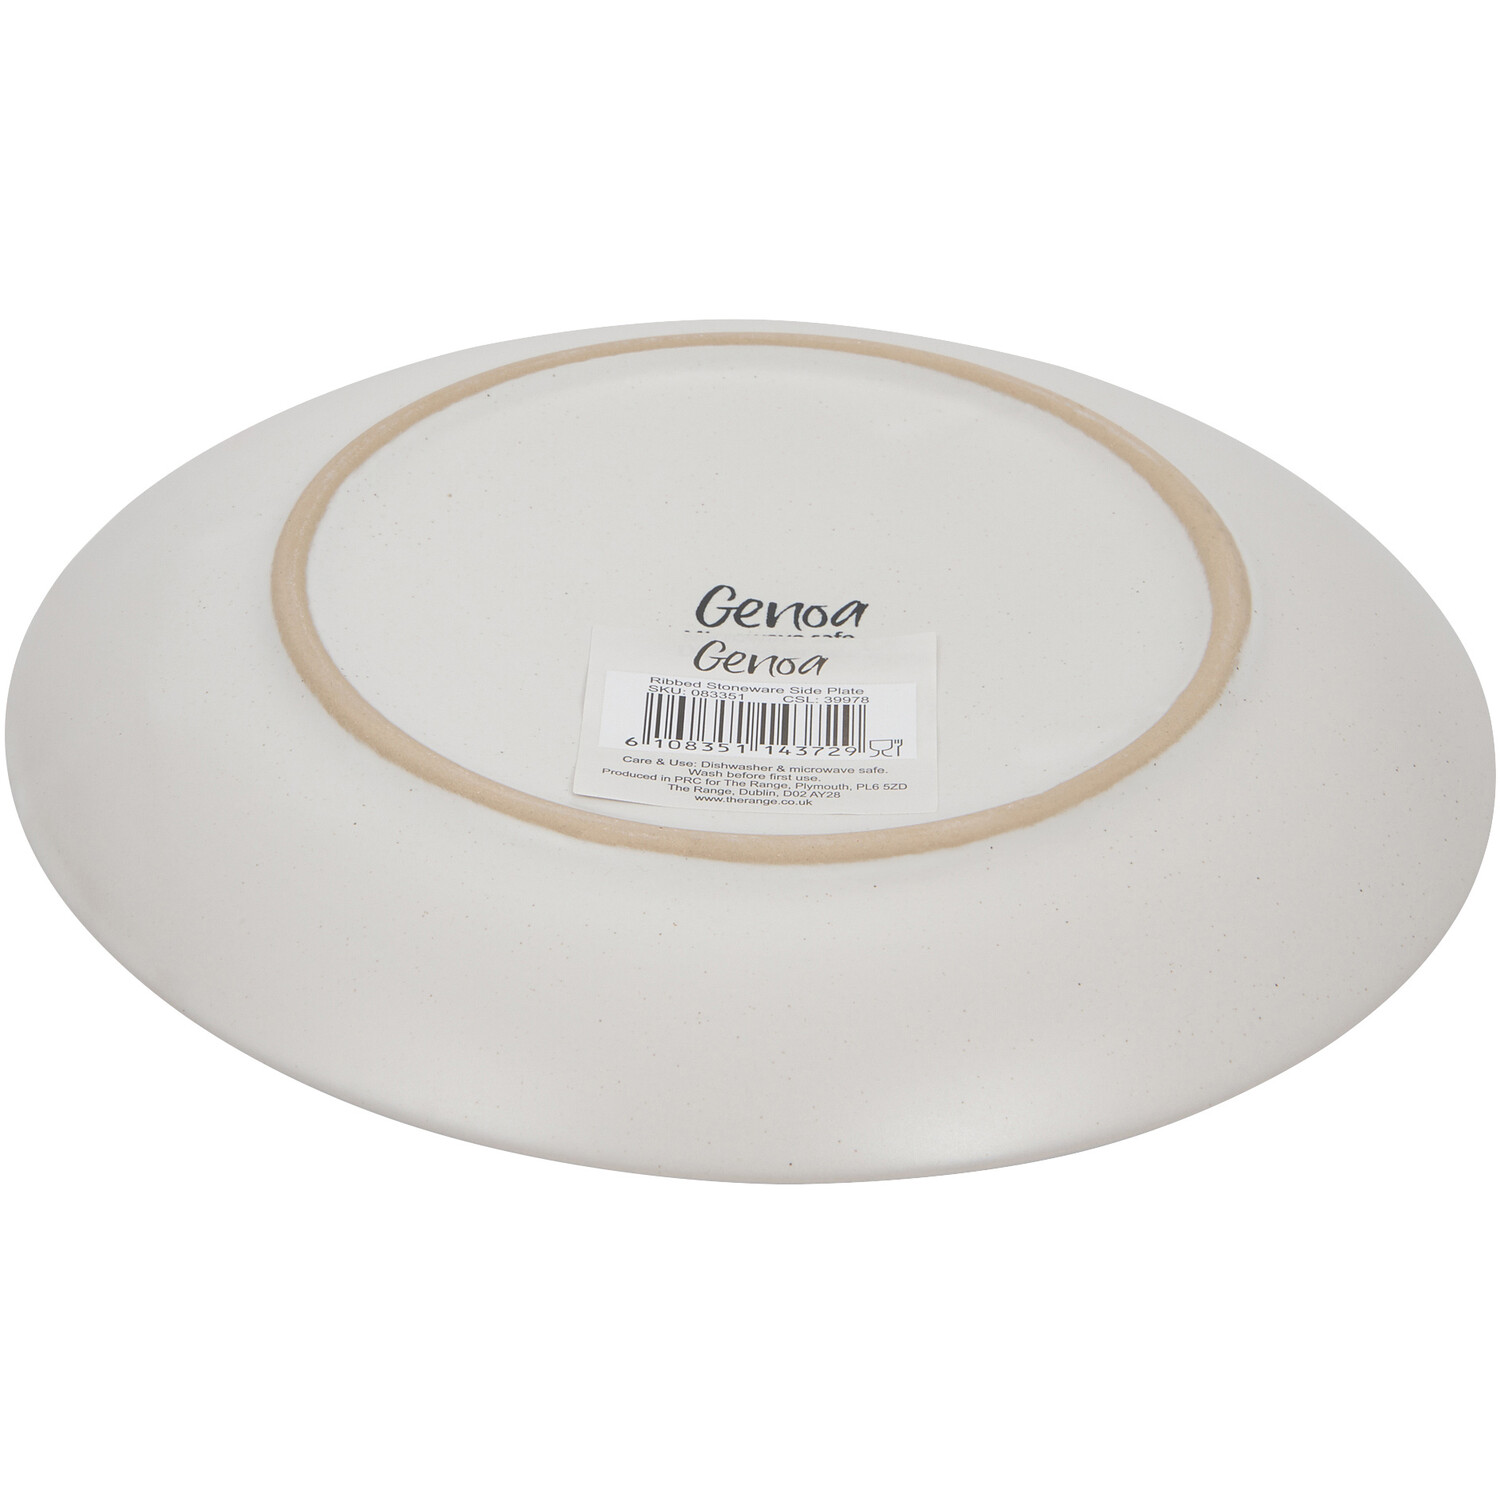 Genoa Ribbed Plate - Cream / Side Plate Image 3